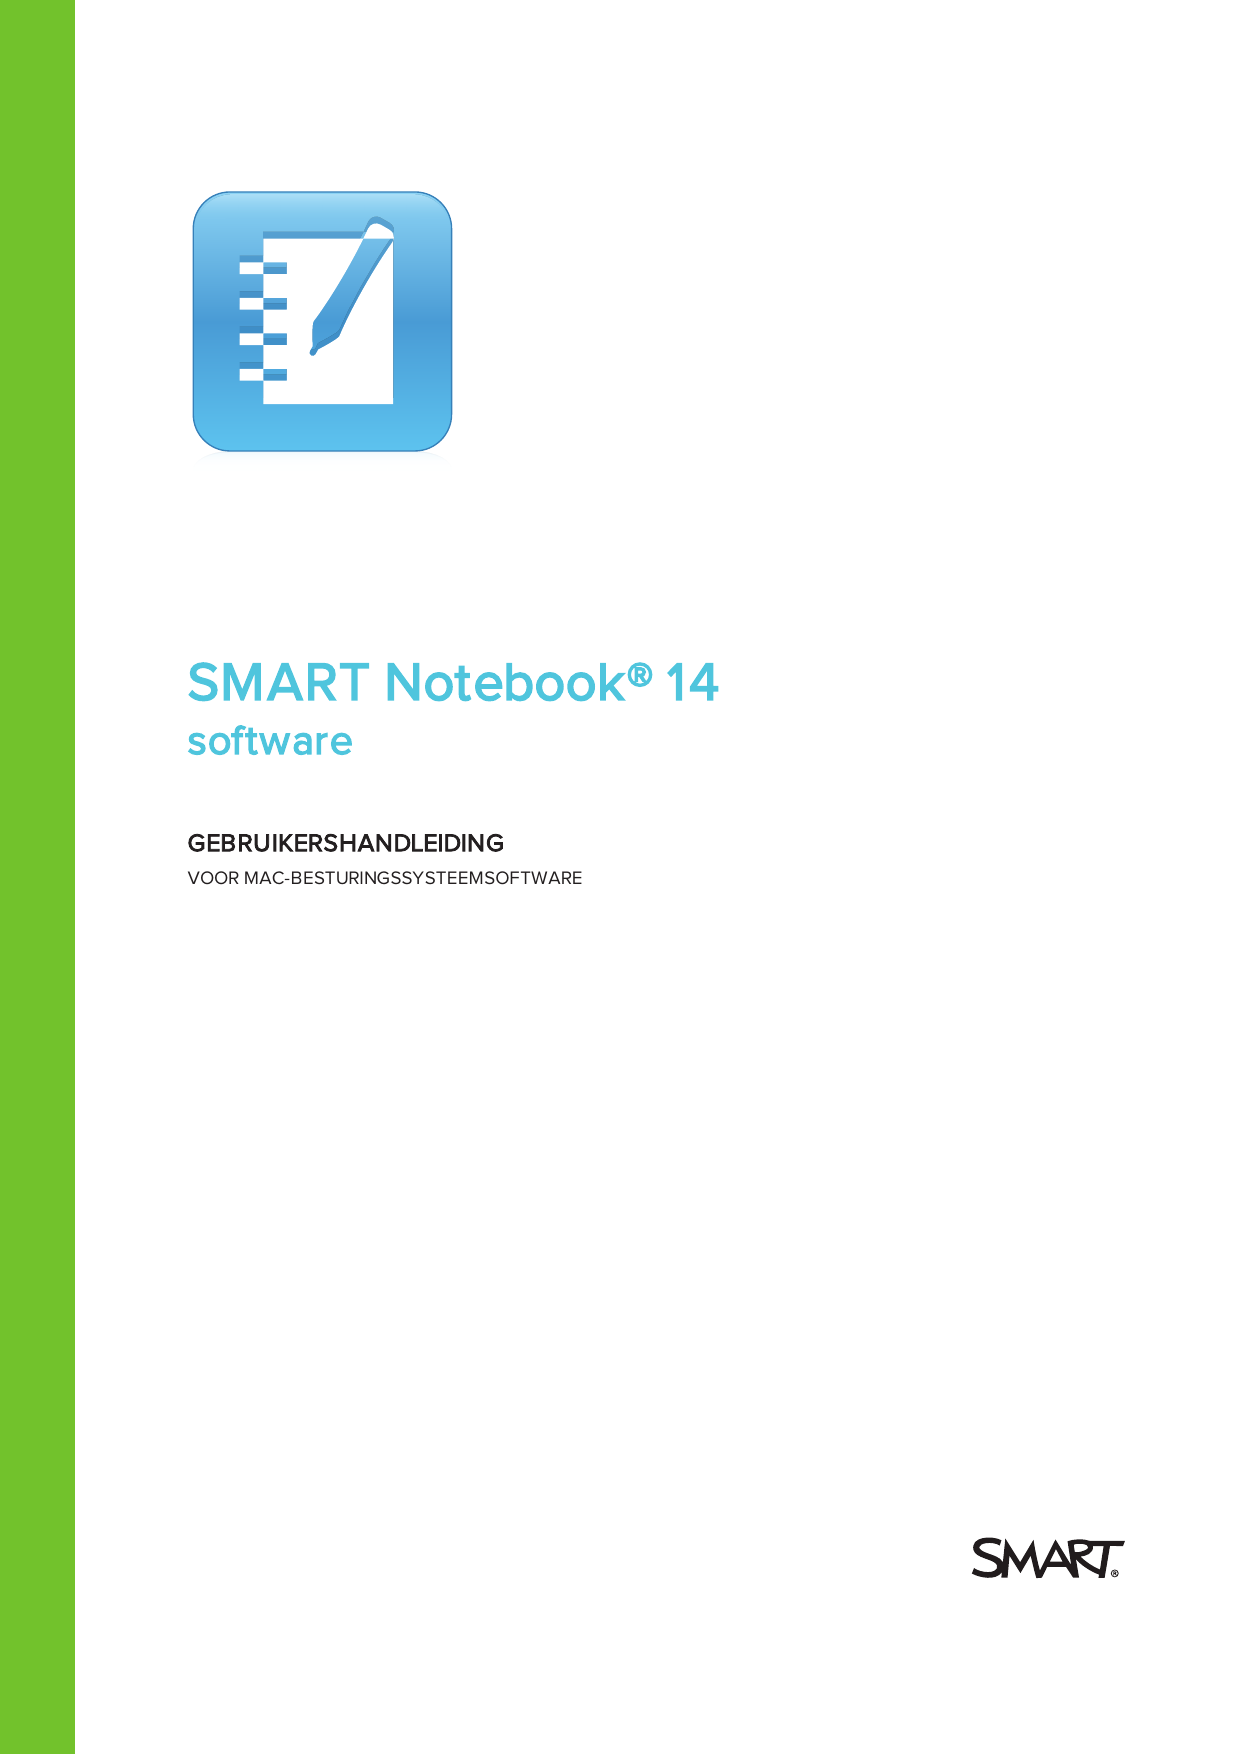 smartboard notebook for mac